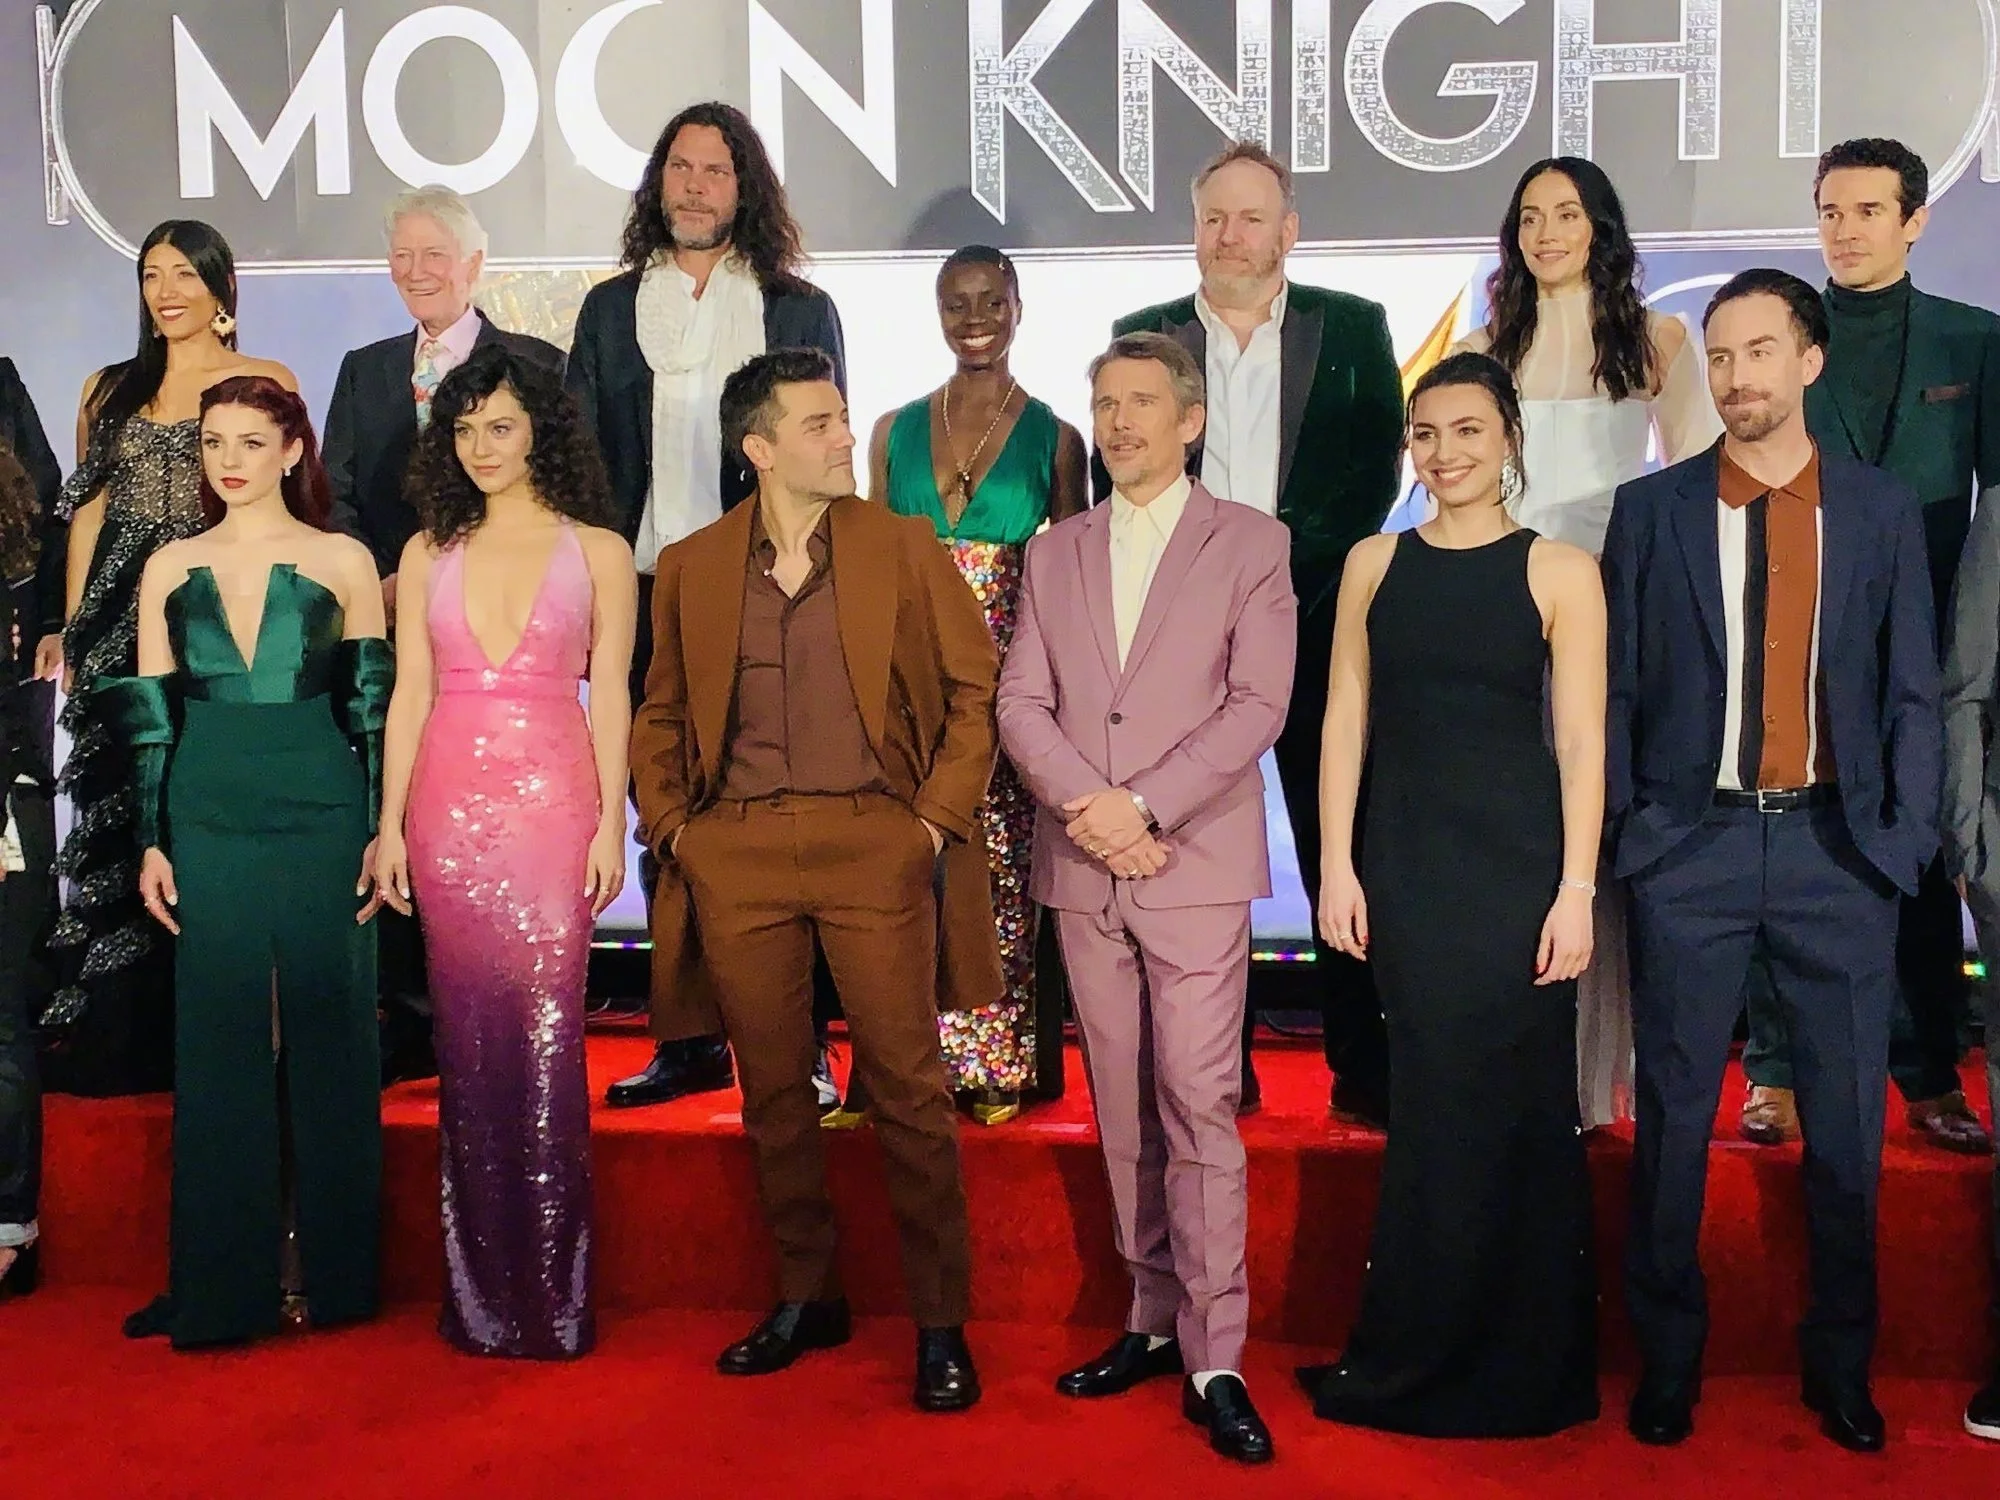 Oscar Isaac at the 'Moon Knight' Los Angeles Premiere